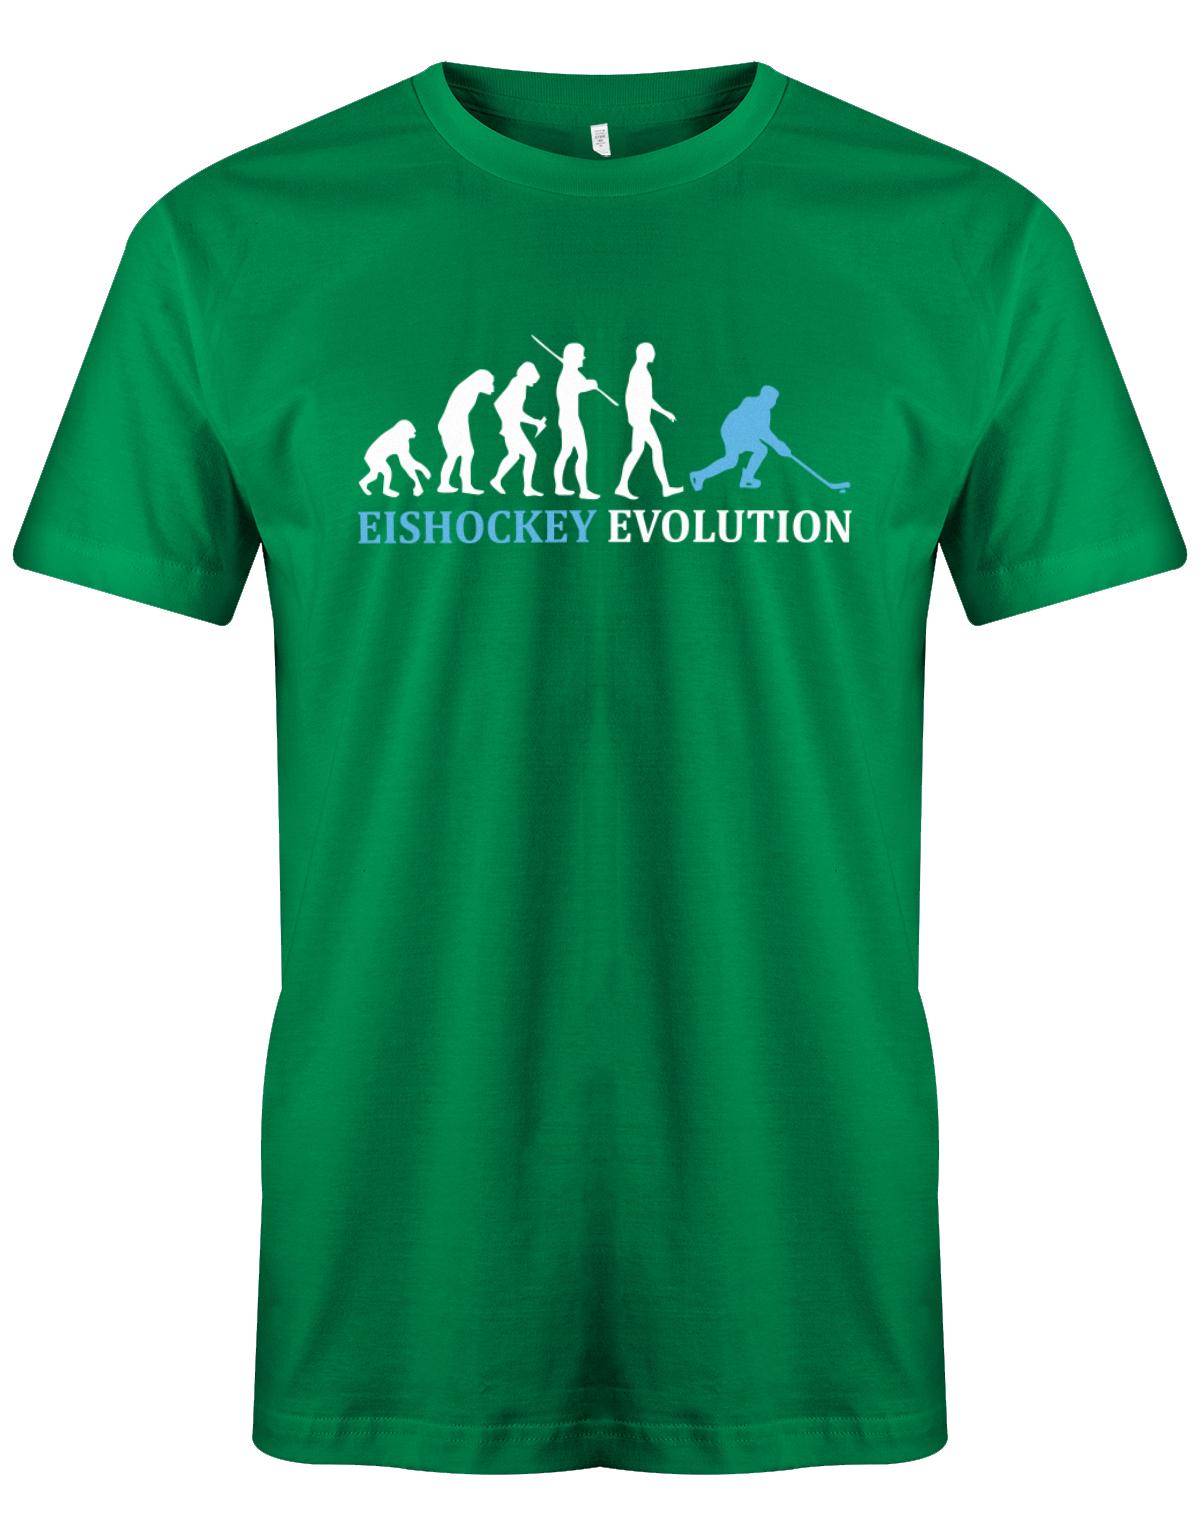 Eishockey-Evolution-Herren-Shirt-Gr-n